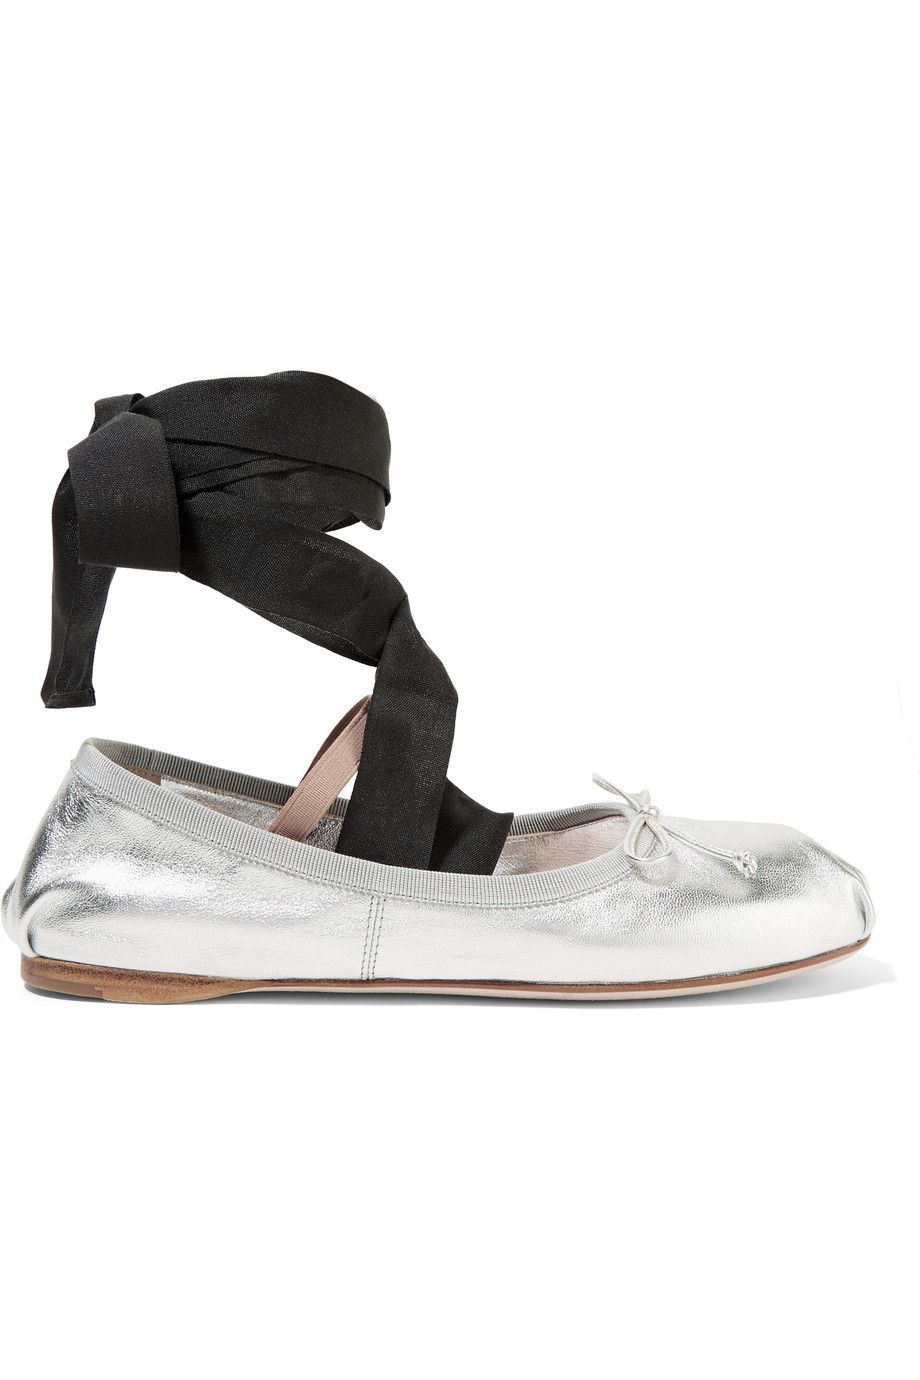 Footwear, Product, White, Tan, Black, Grey, Beige, Walking shoe, Fashion design, Skate shoe, 